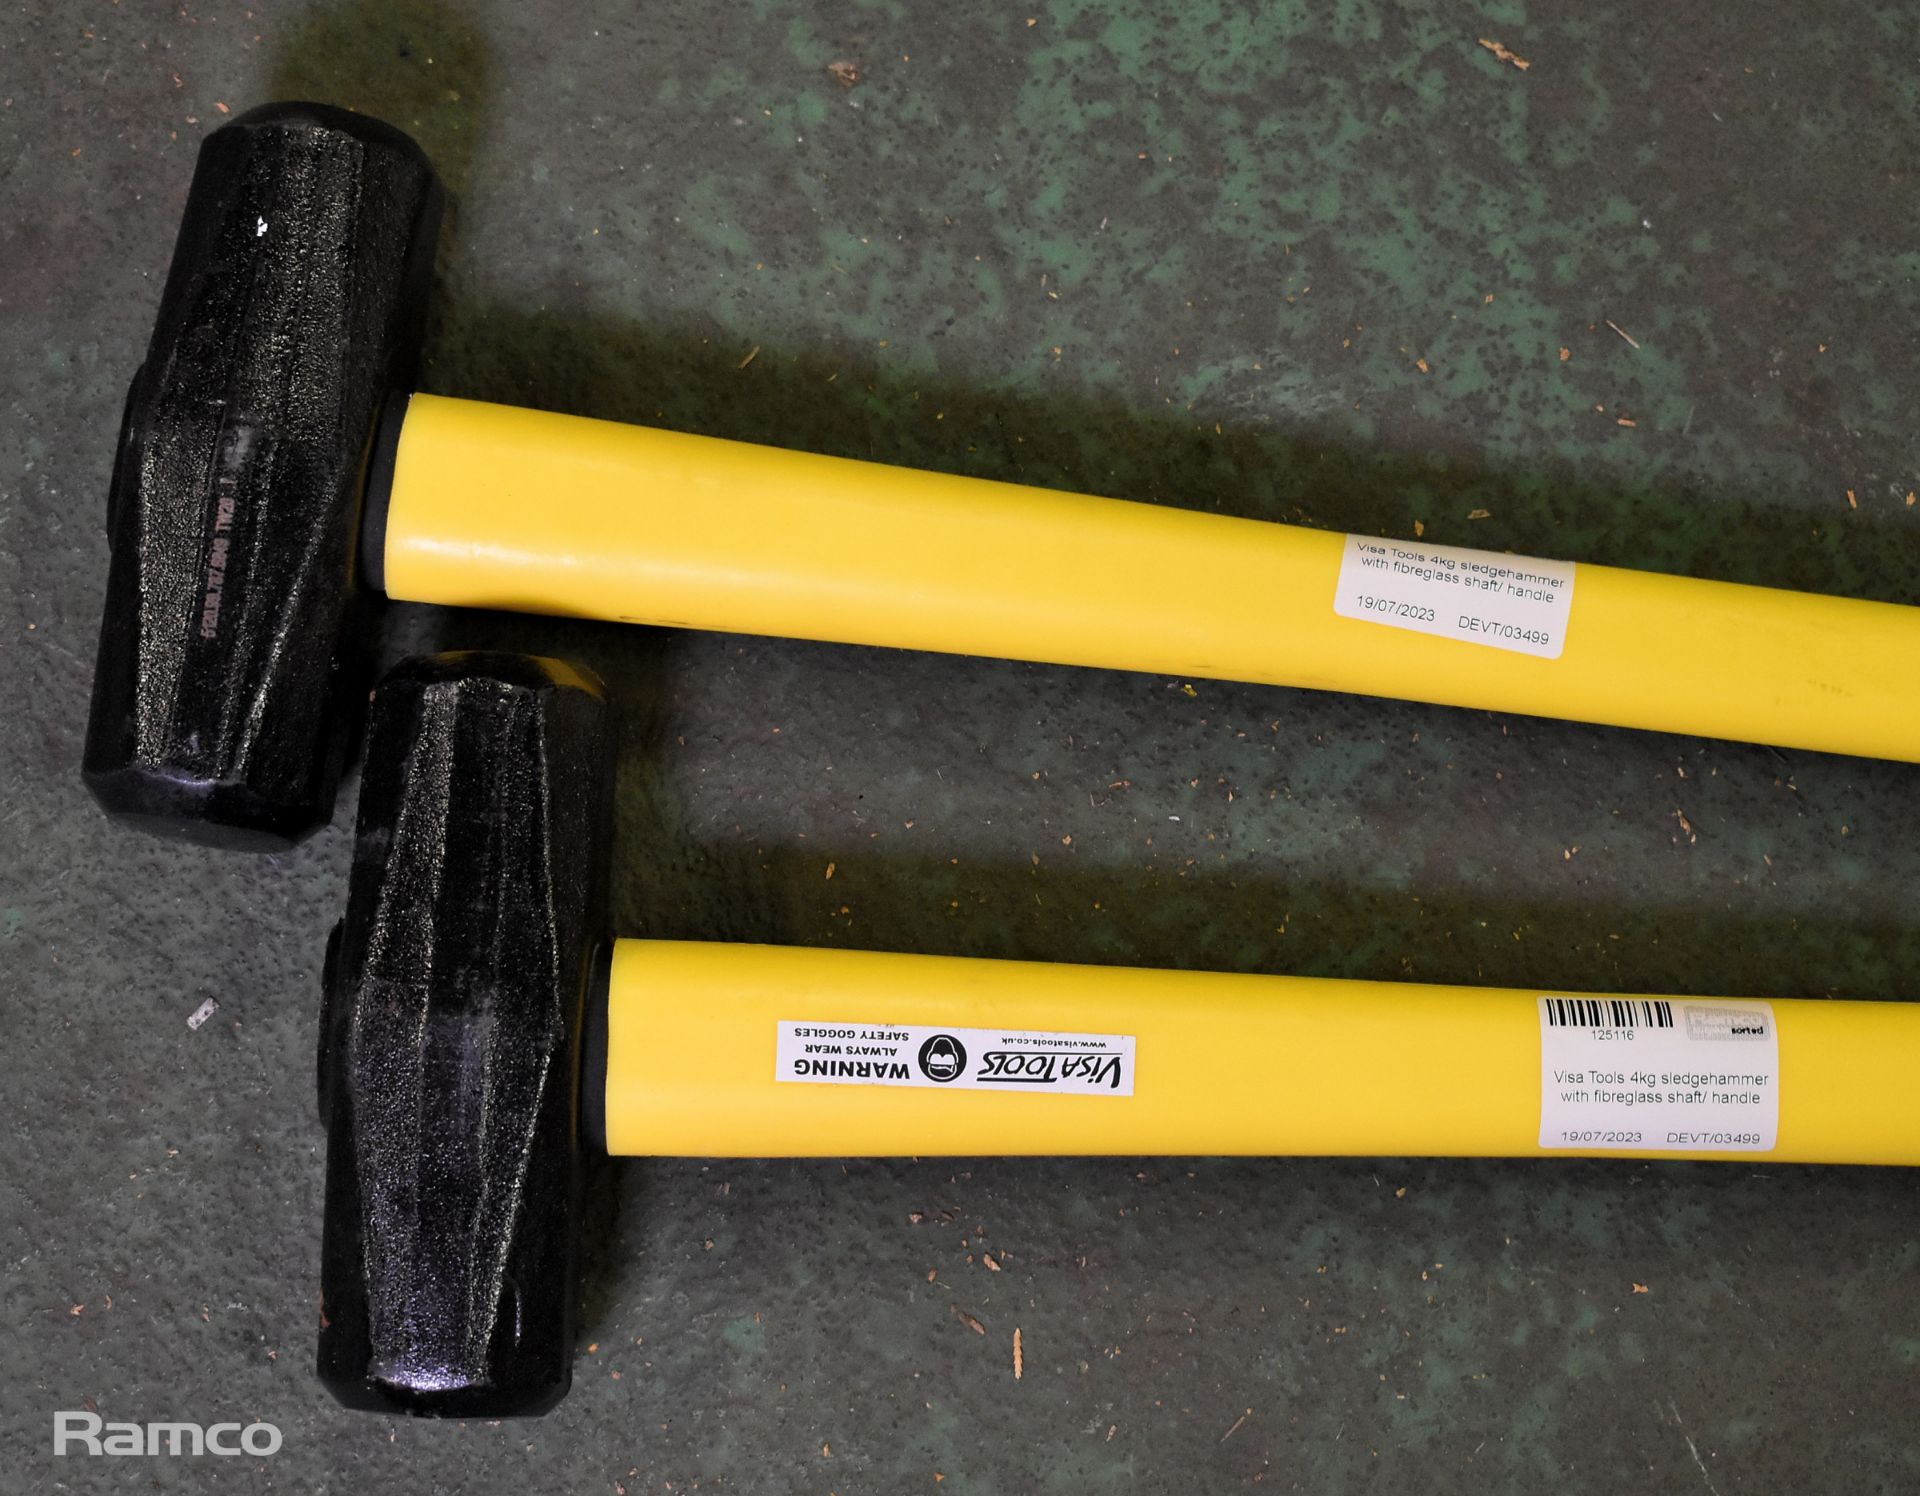 2x Visa Tools 4kg sledgehammers with fibreglass shaft / handle - Bild 2 aus 2